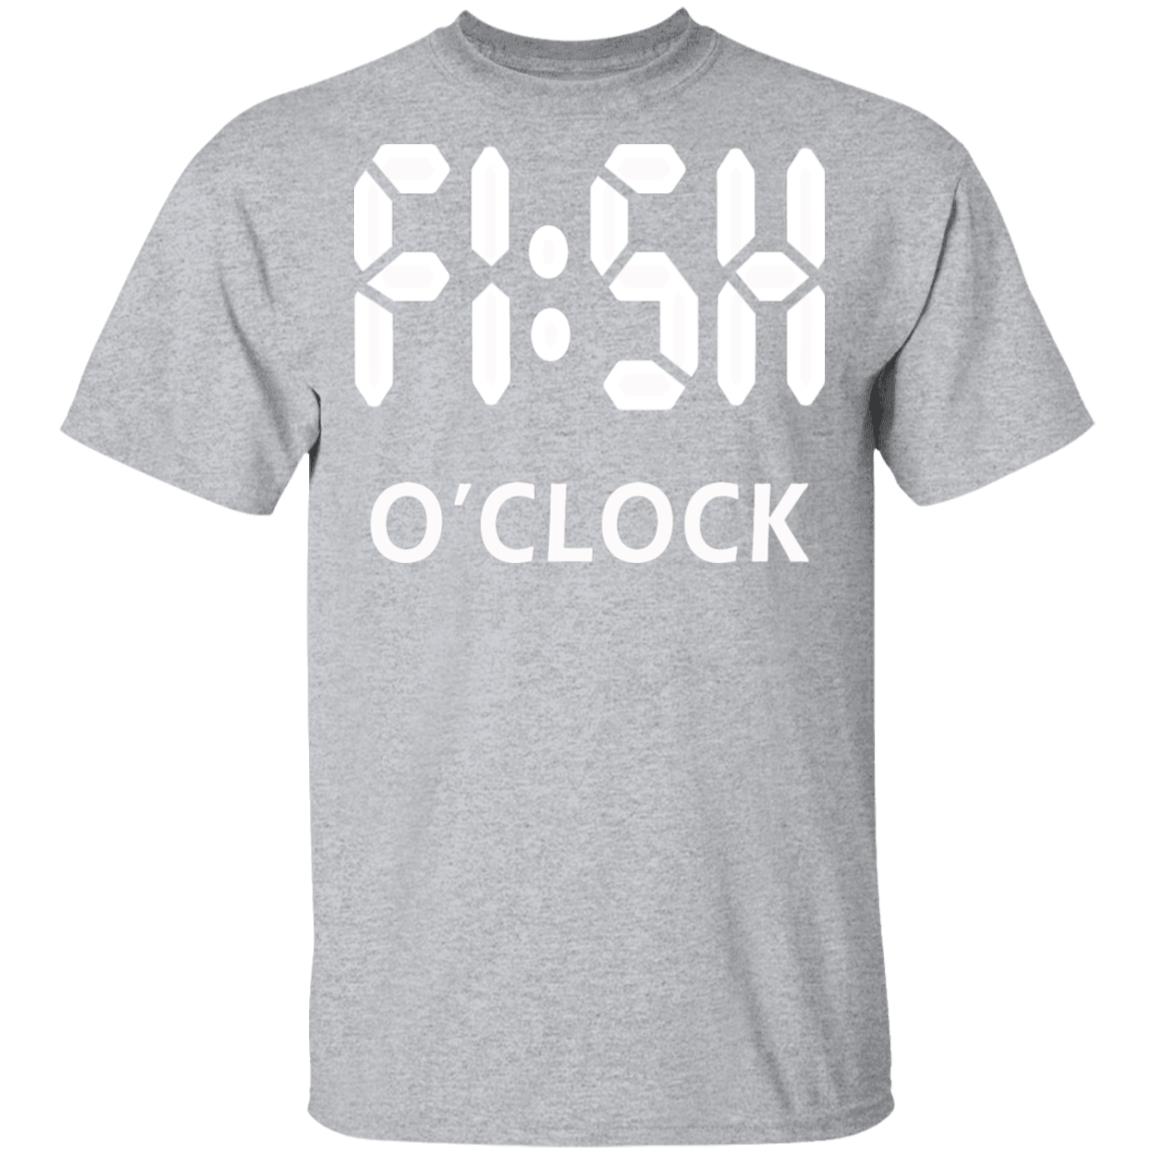 Fish O'Clock T-Shirt